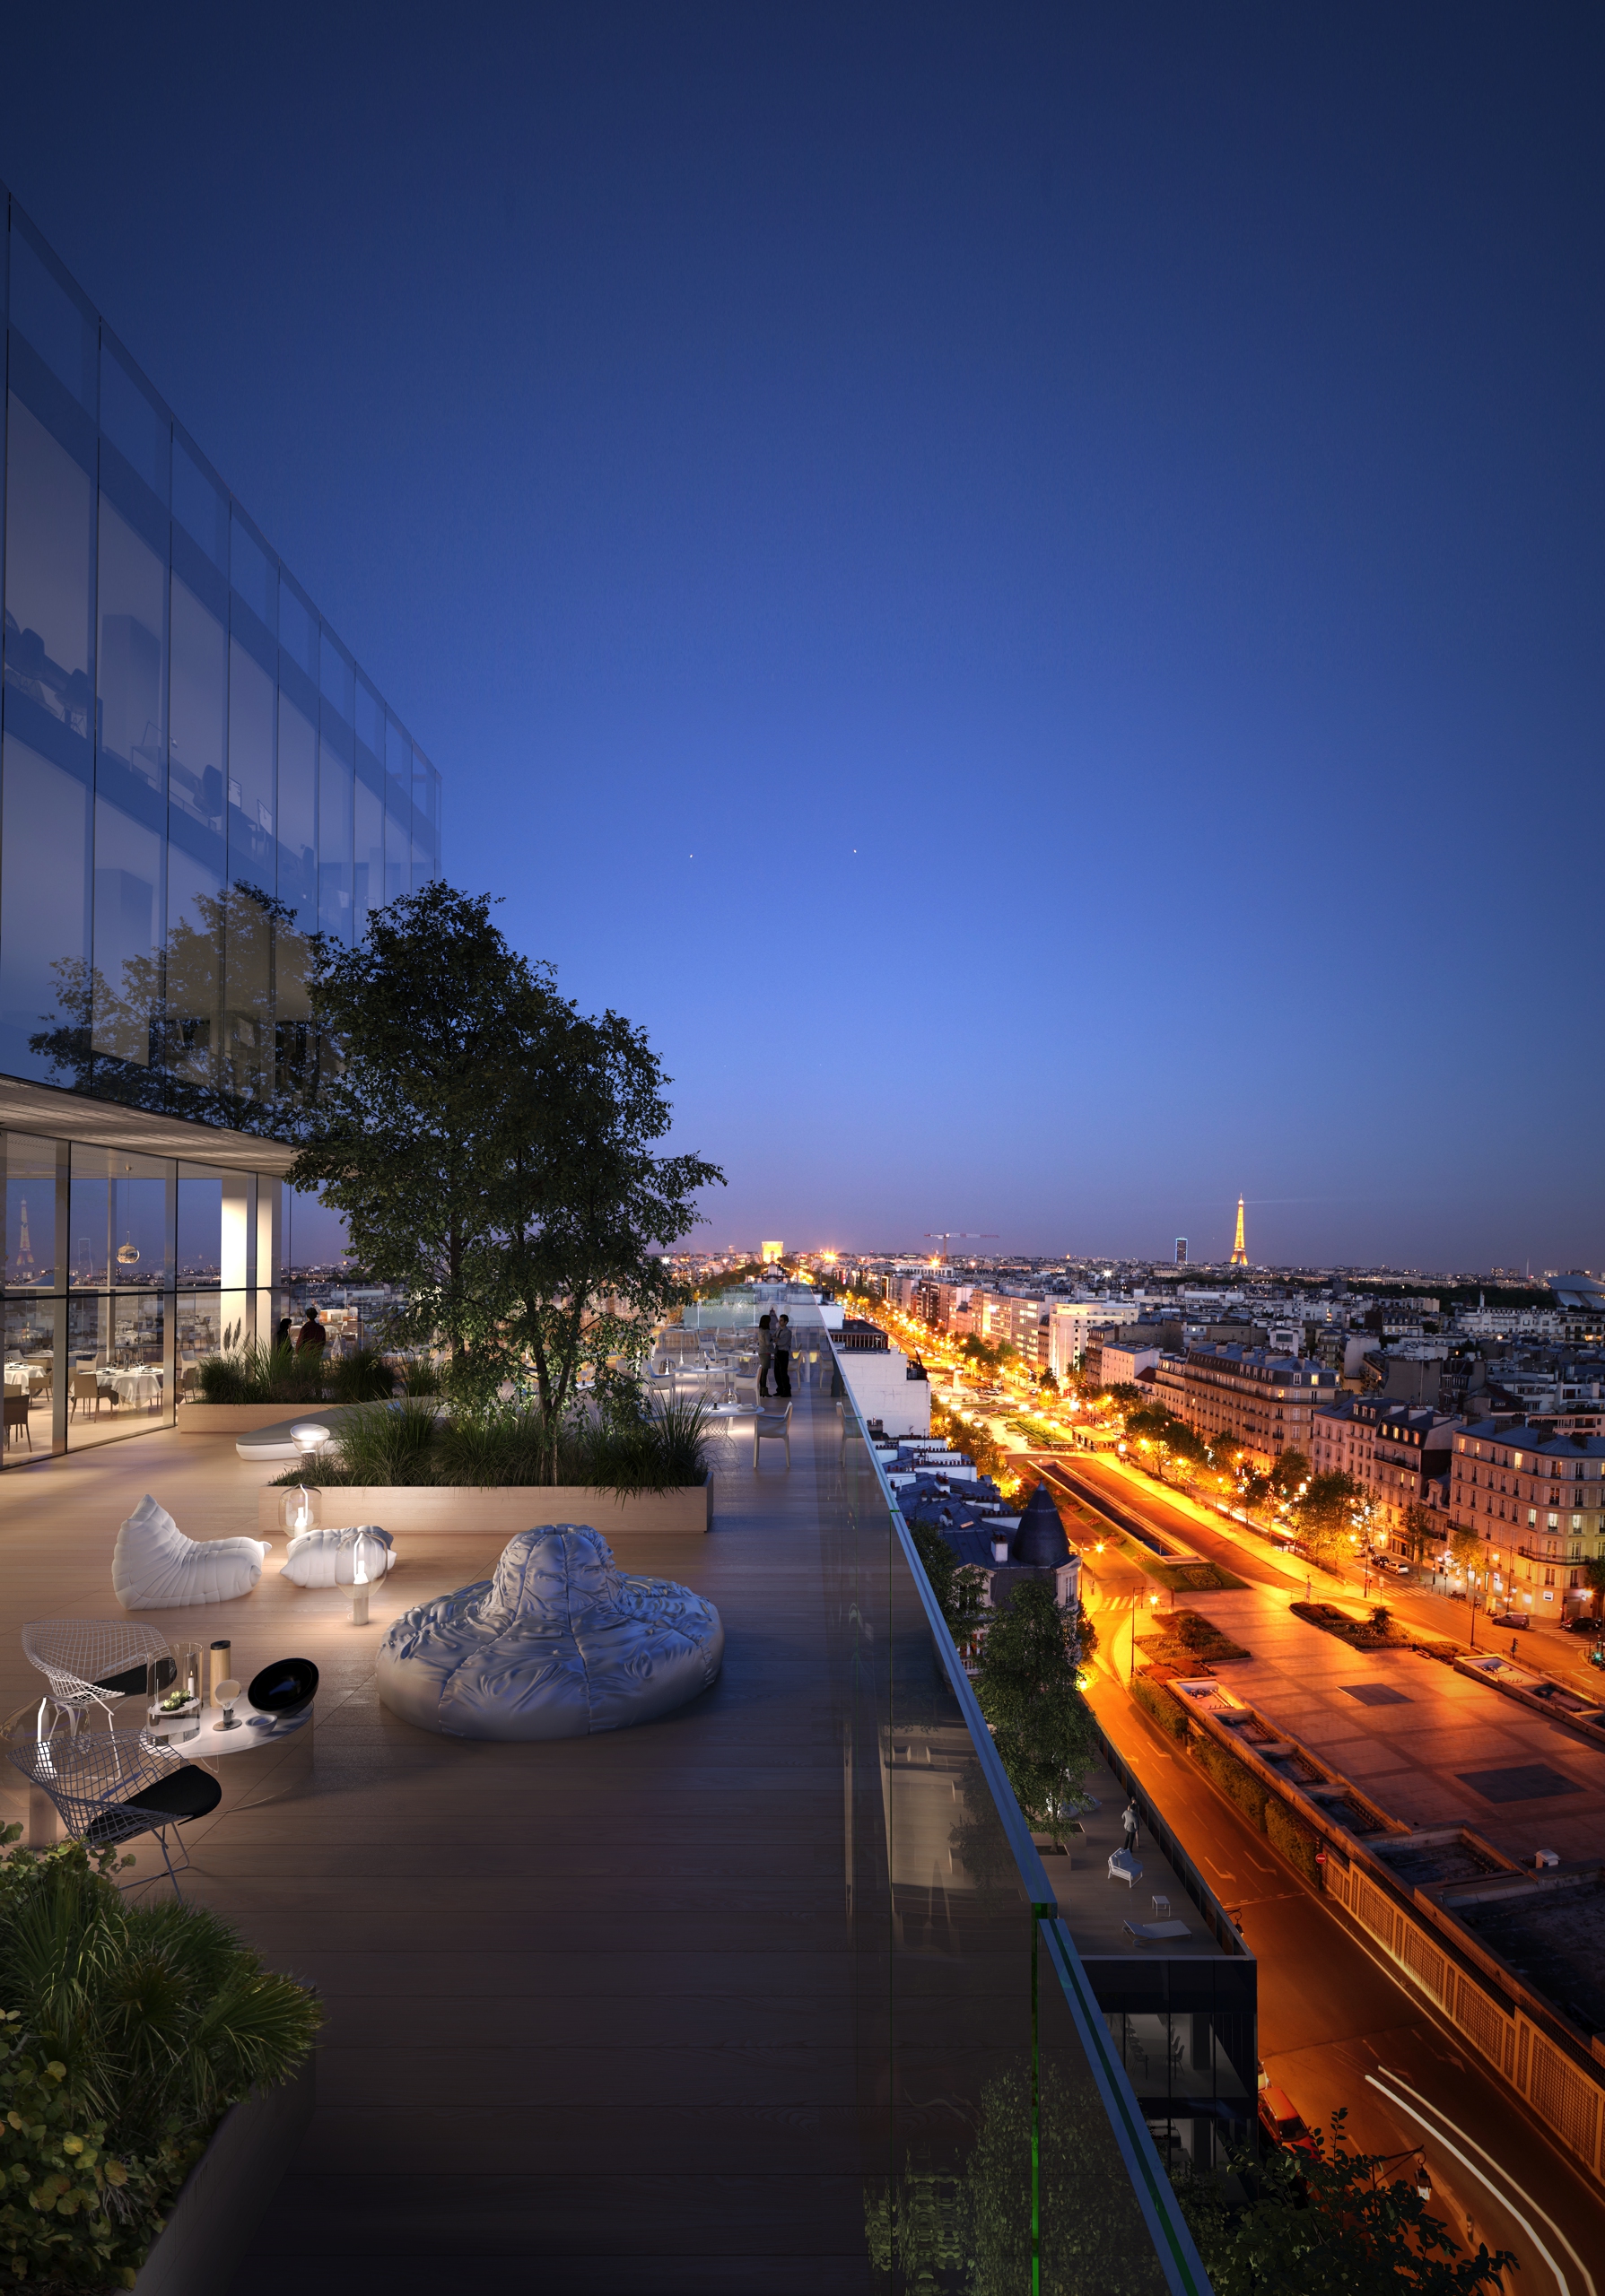 Le siège des parfums Christian Dior va s'installer à Neuilly - Le